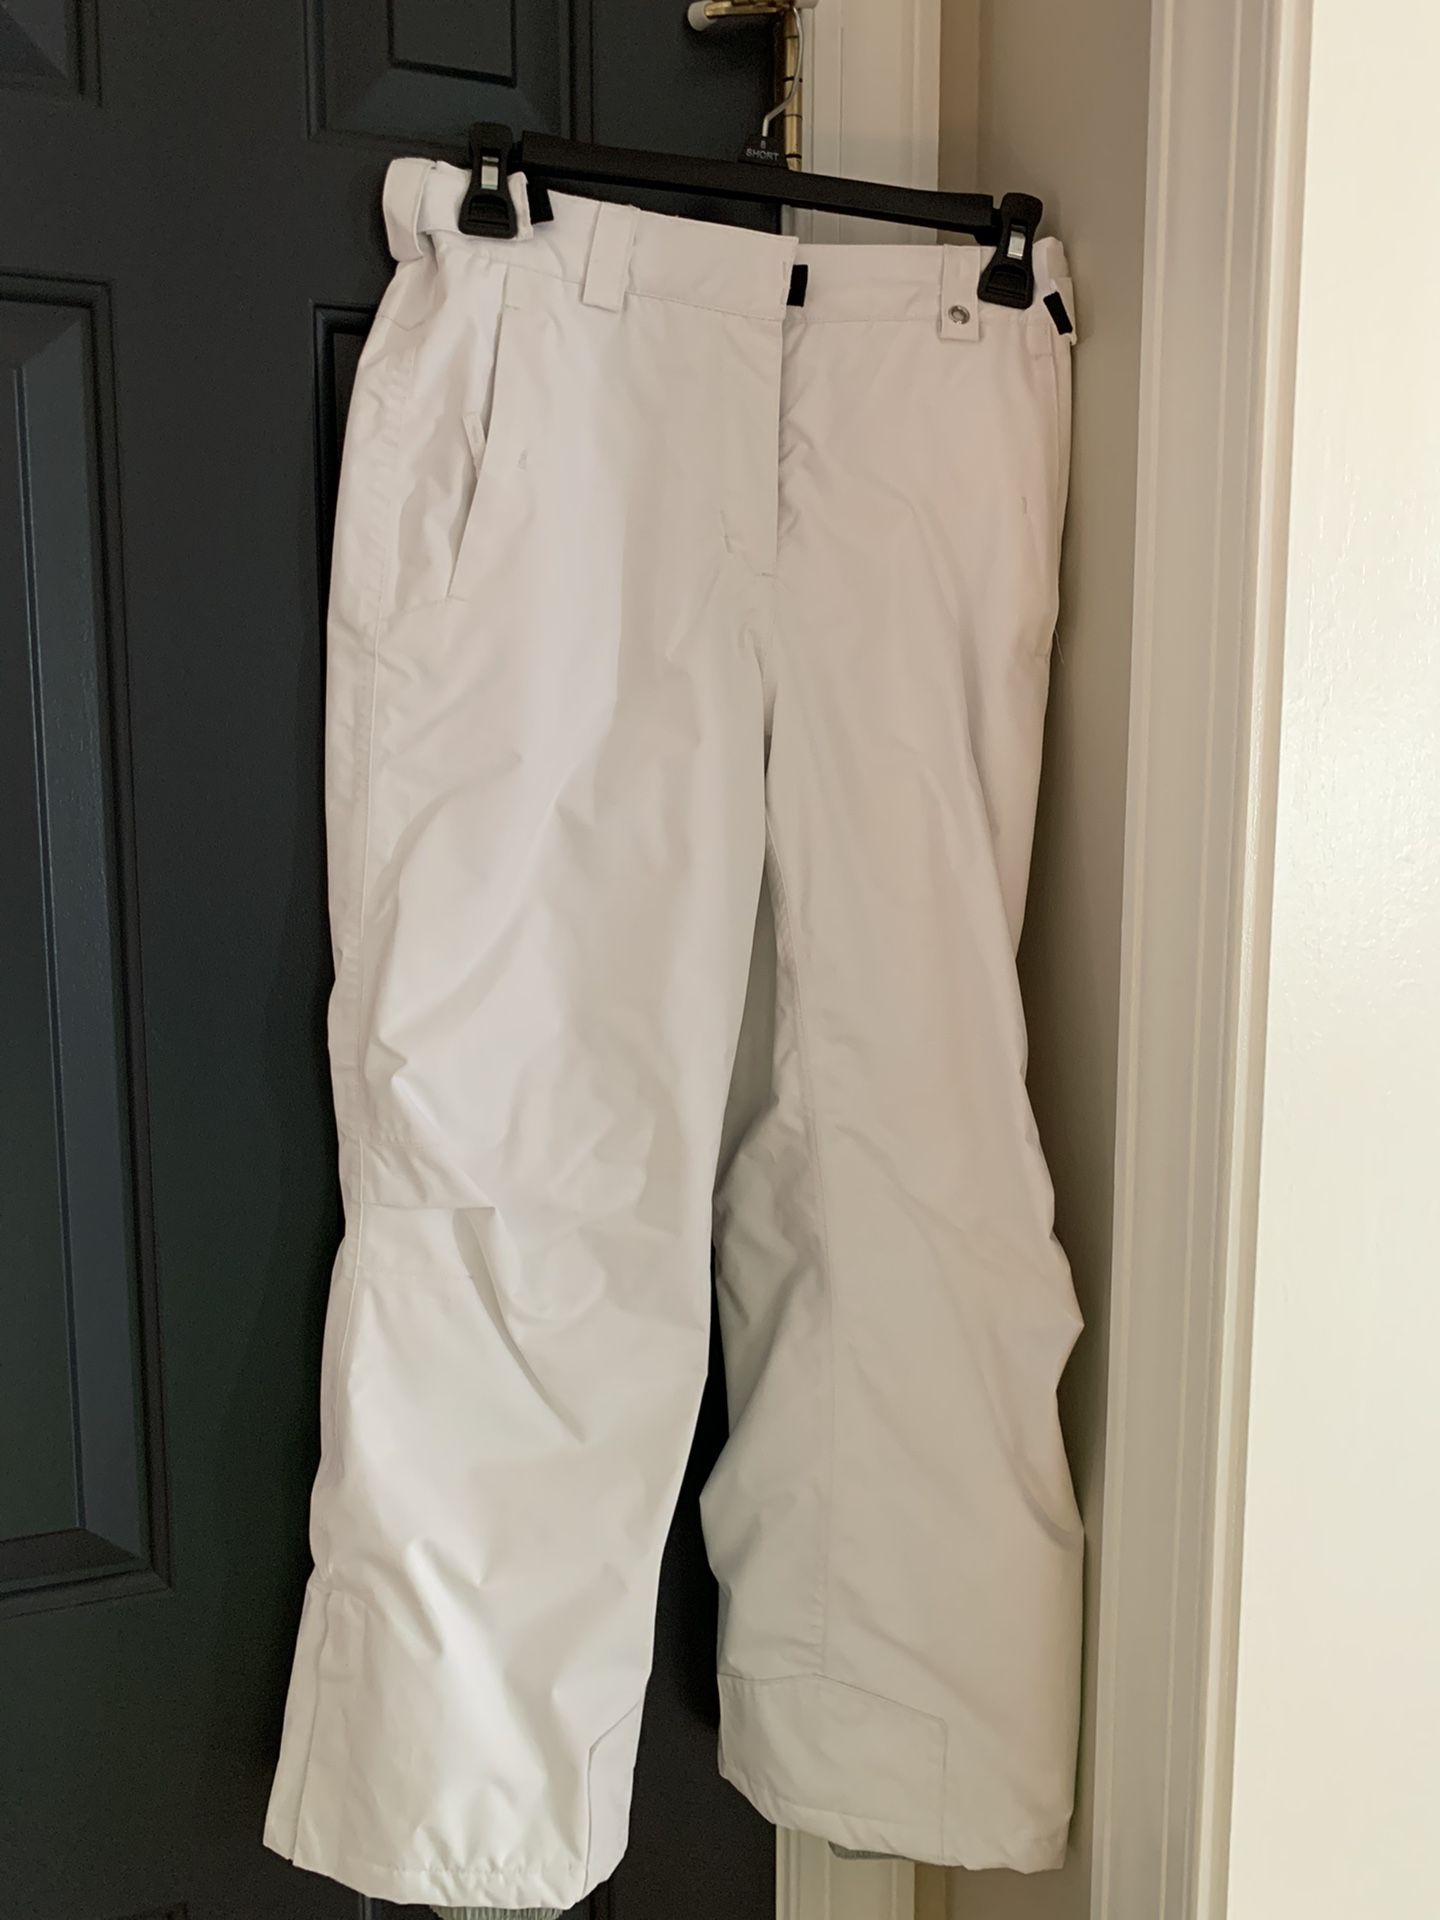 Girl size 10 Kanbon Ski pants